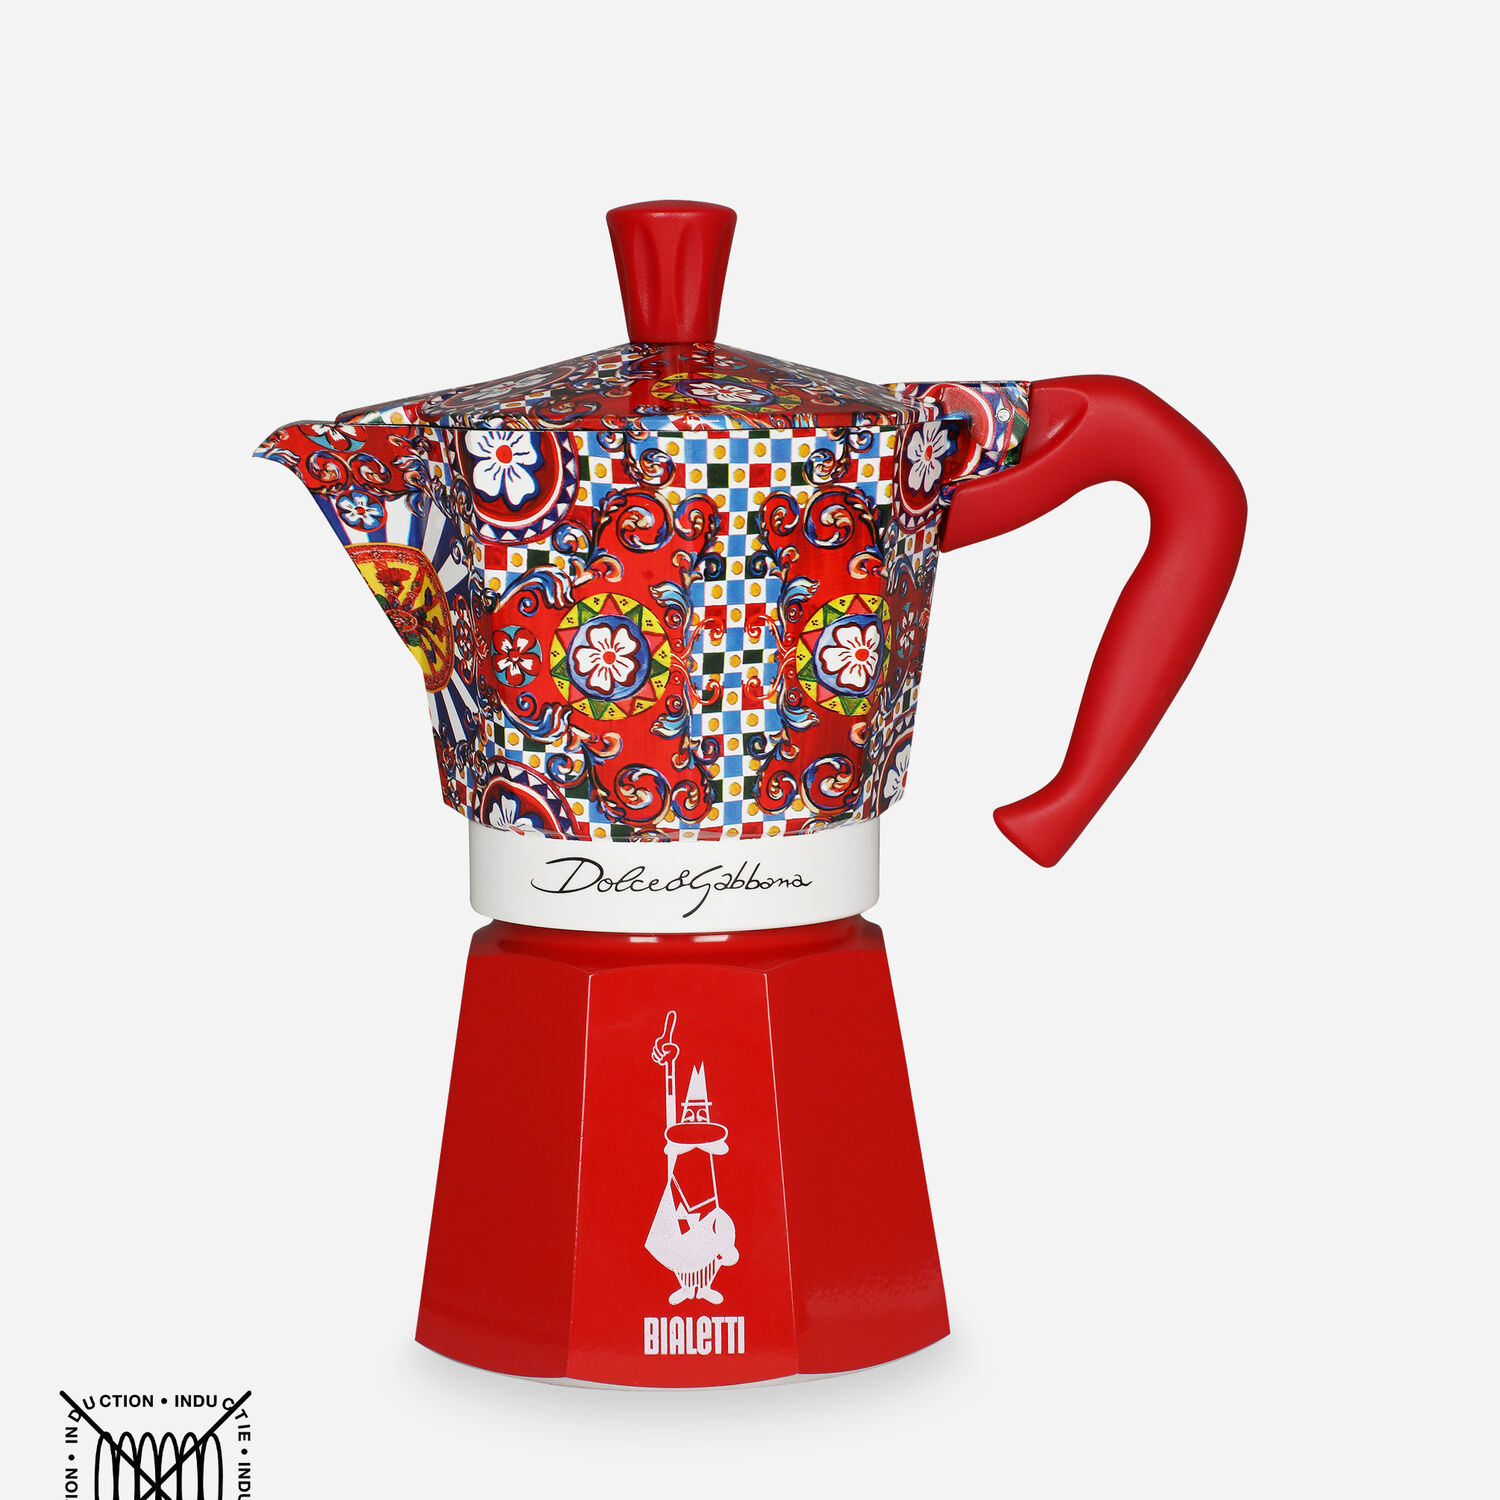 Bialetti Moka Express 3 Cups (Italia- Multicolor): Made in Italy